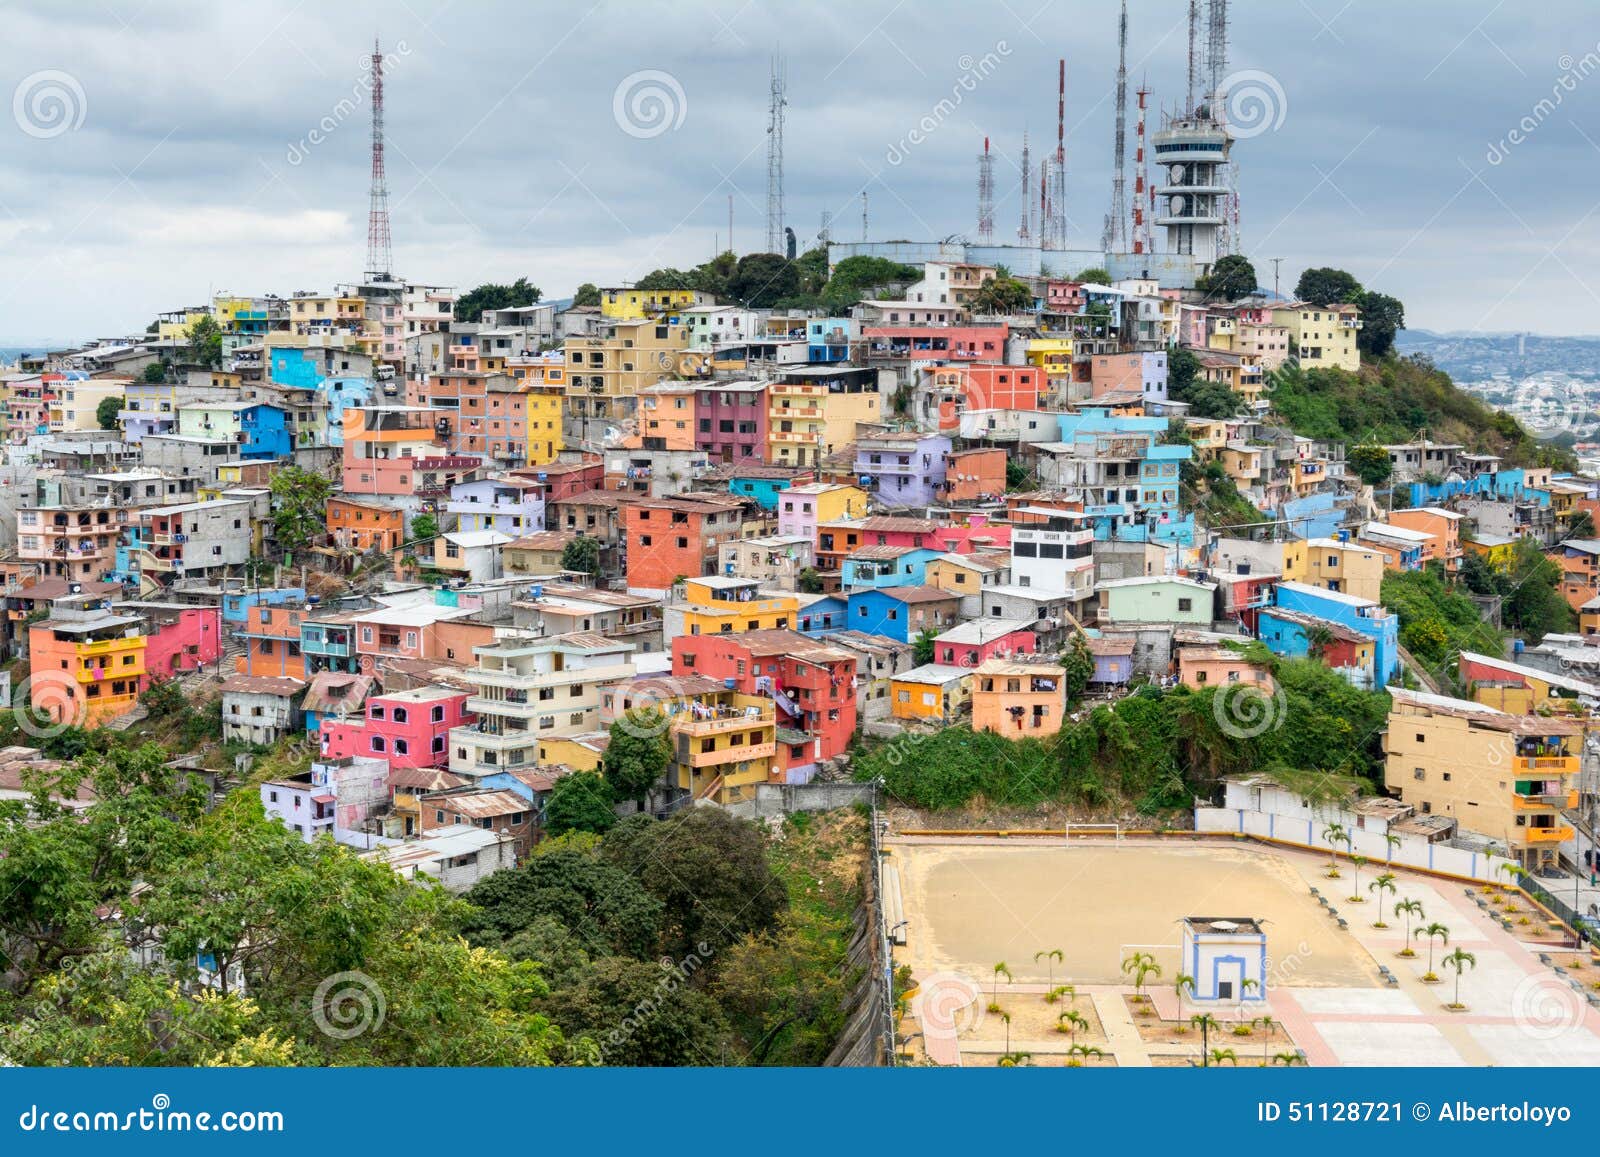 las penas neighborhood, guayaquil, ecuador